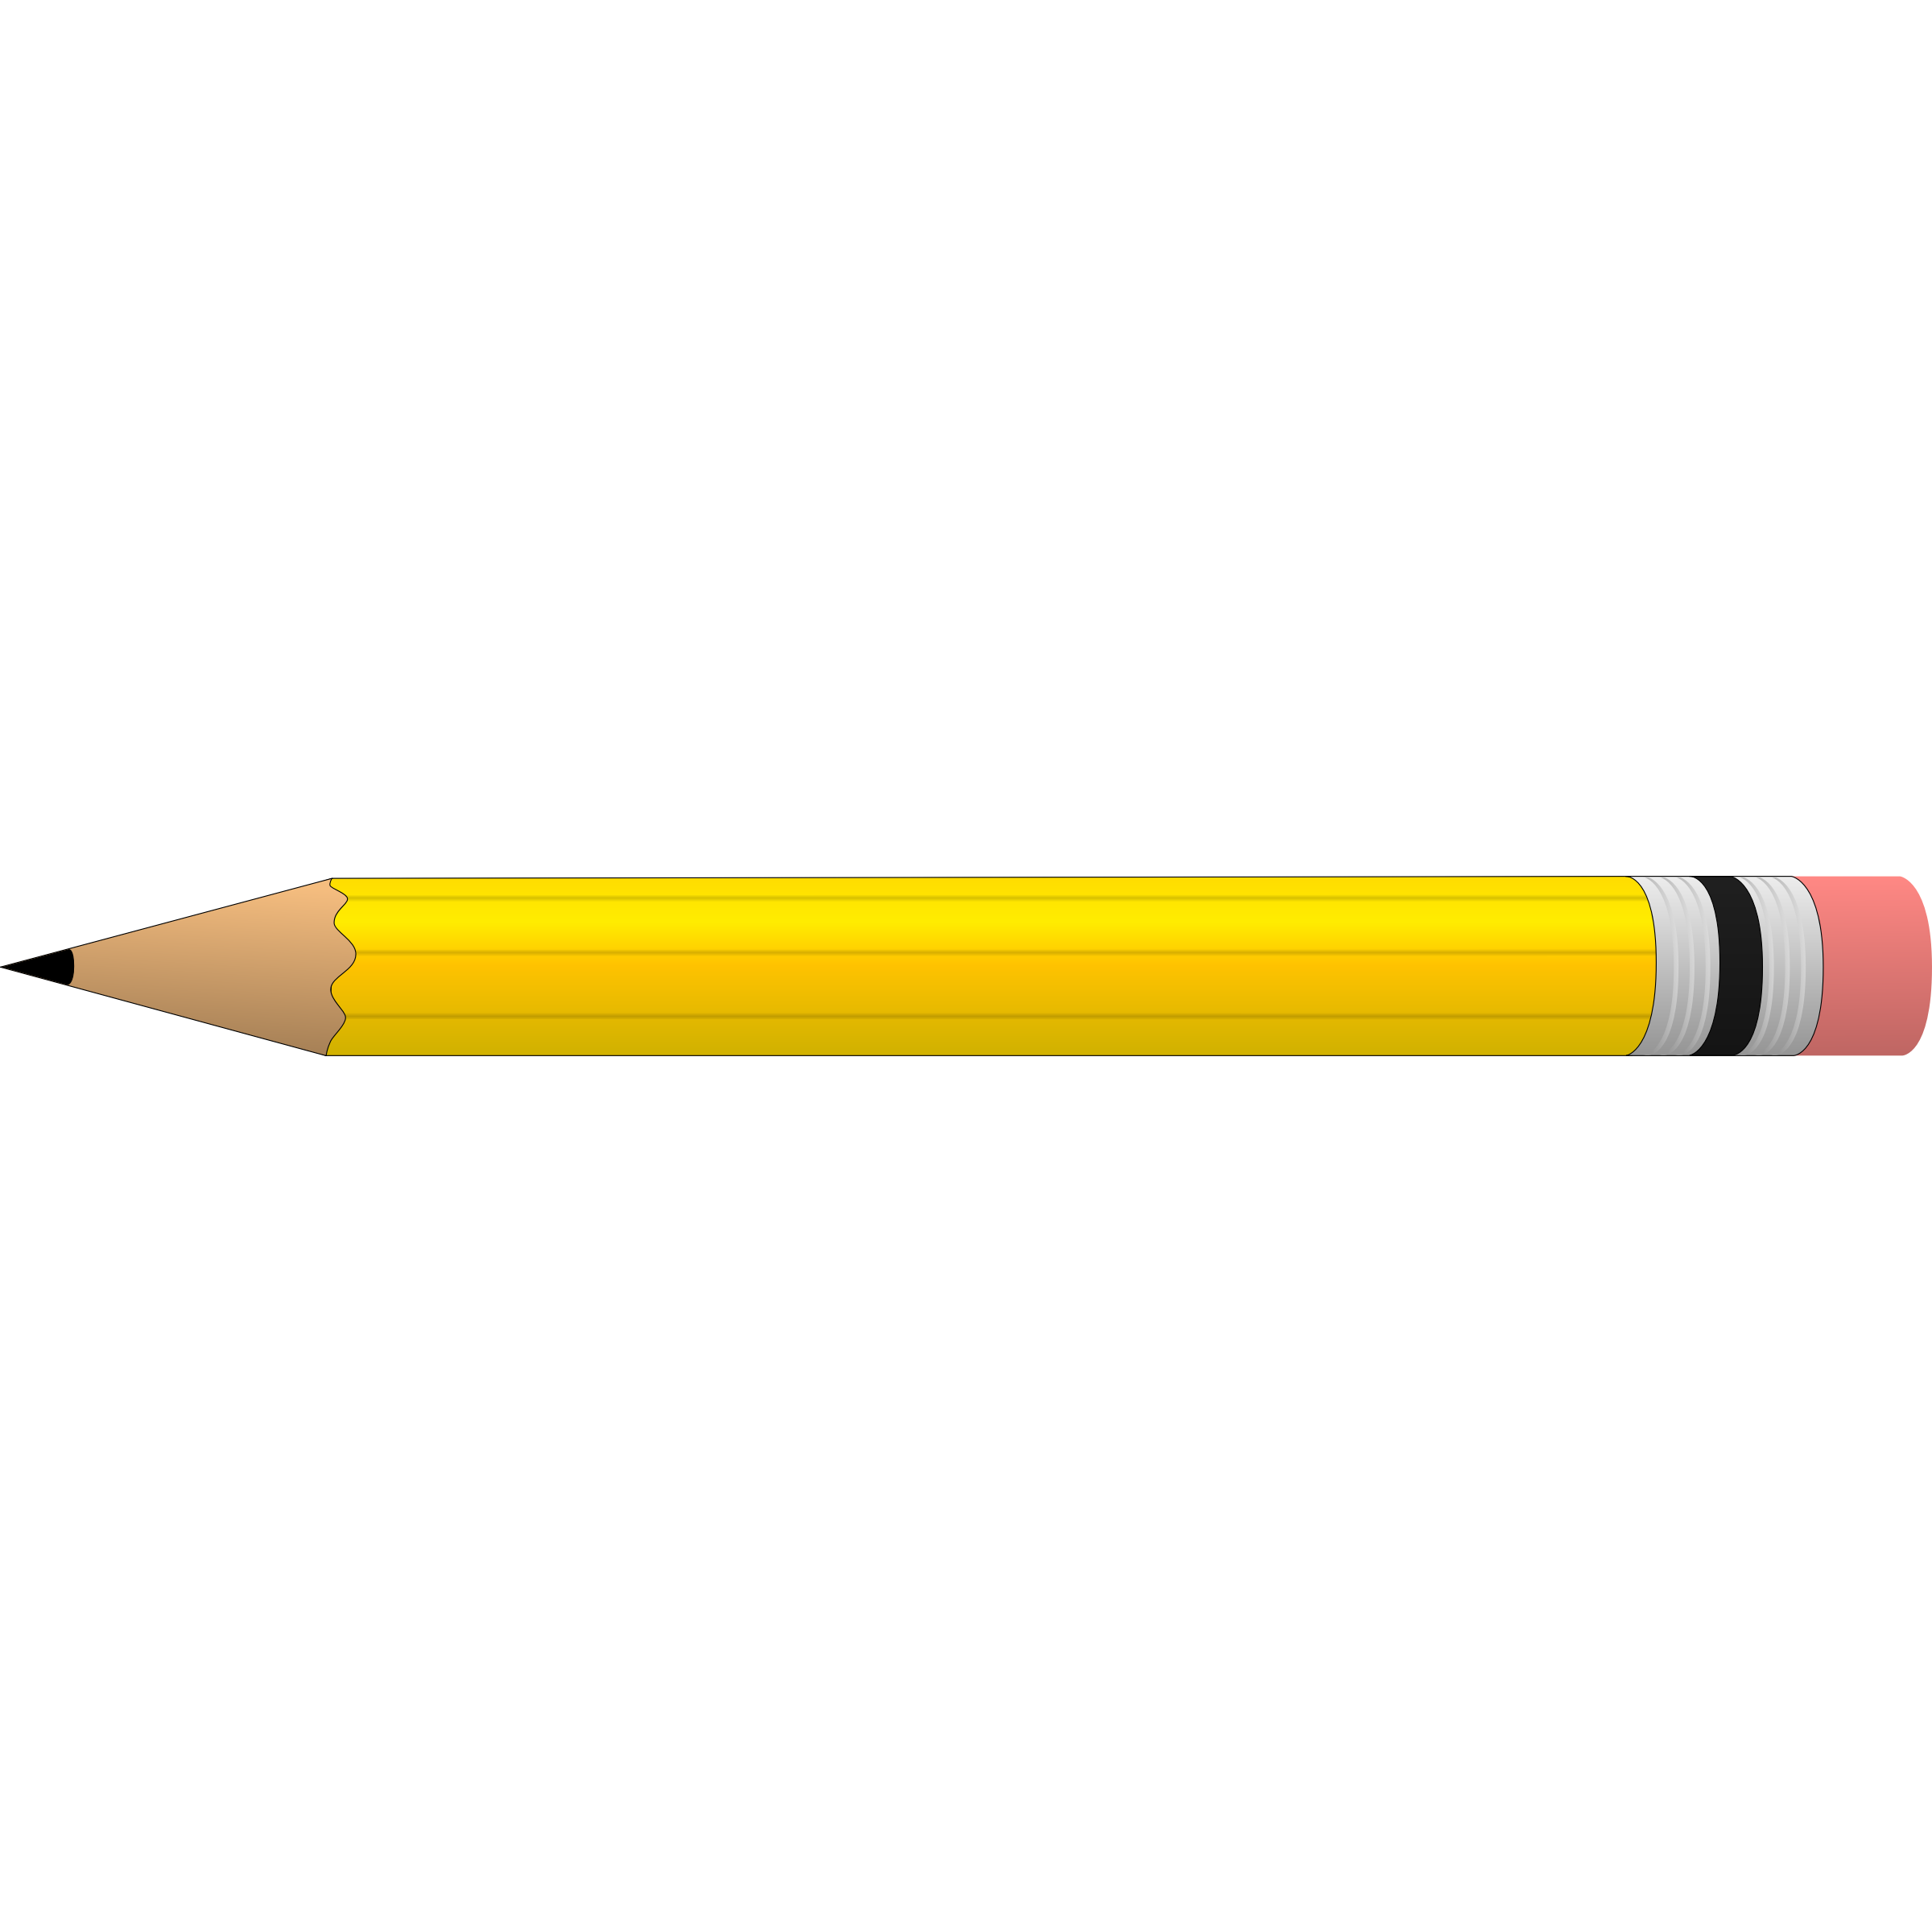 yellow pencil clipart - photo #24